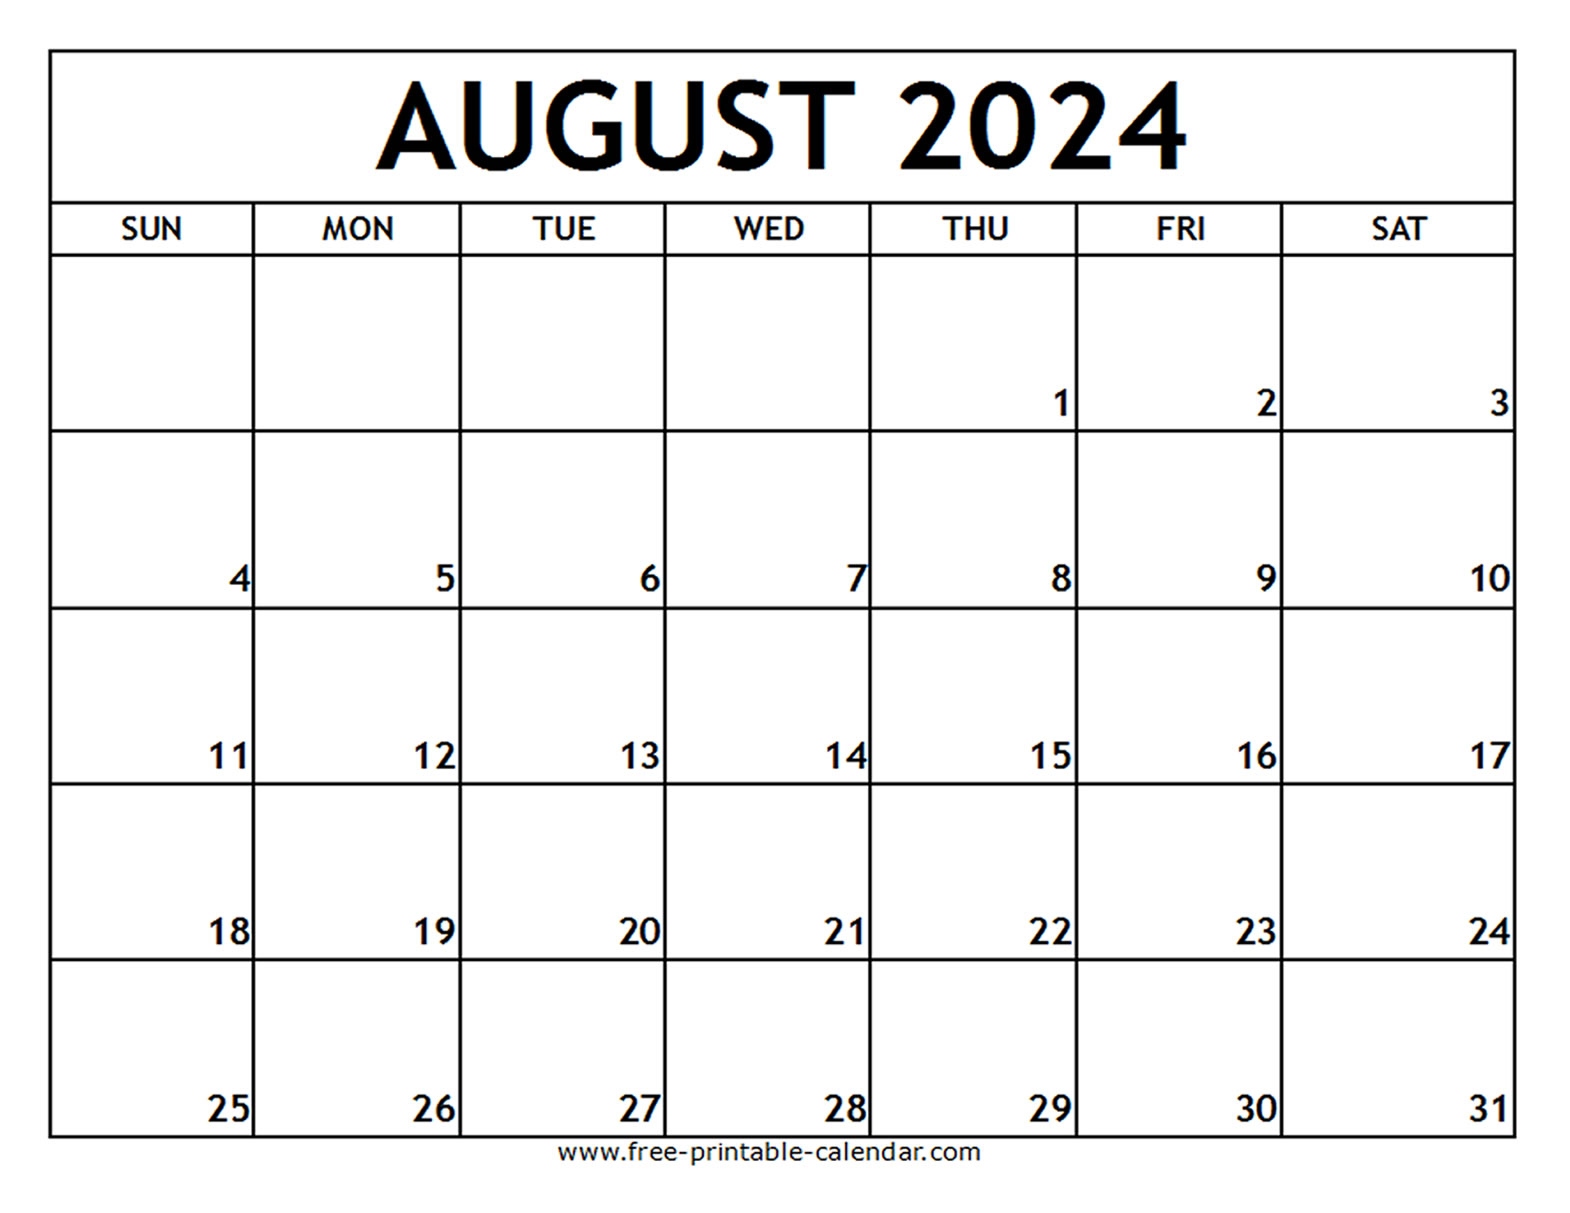 August 2024 Printable Calendar - Free-Printable-Calendar with Free Printable August 2024 Calendar Canada